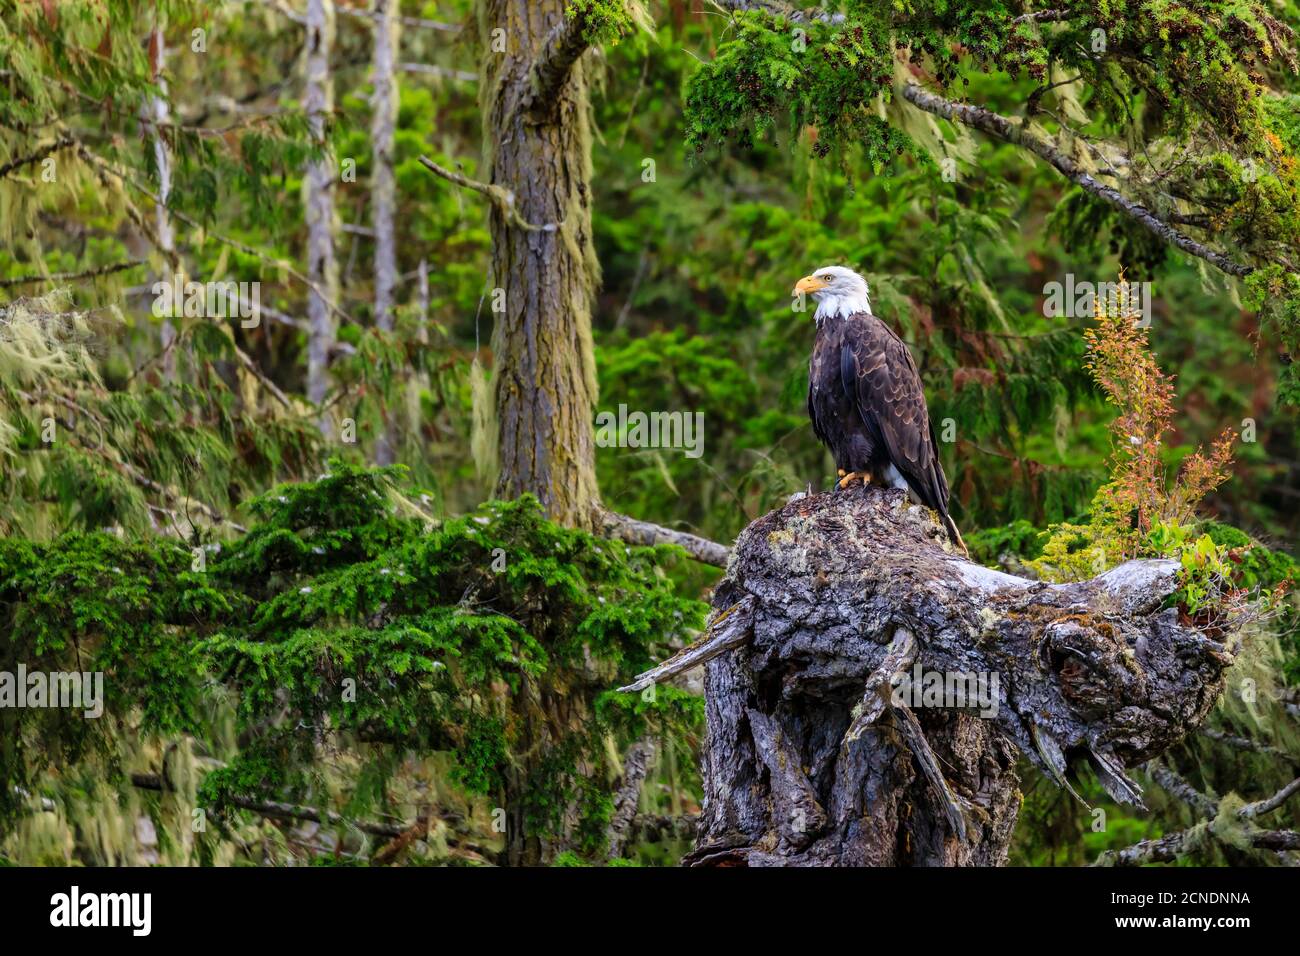 Bald Eagle (Haliaeetus leucocephalus), in a forest setting, Alert Bay, Inside Passage, British Columbia, Canada Stock Photo